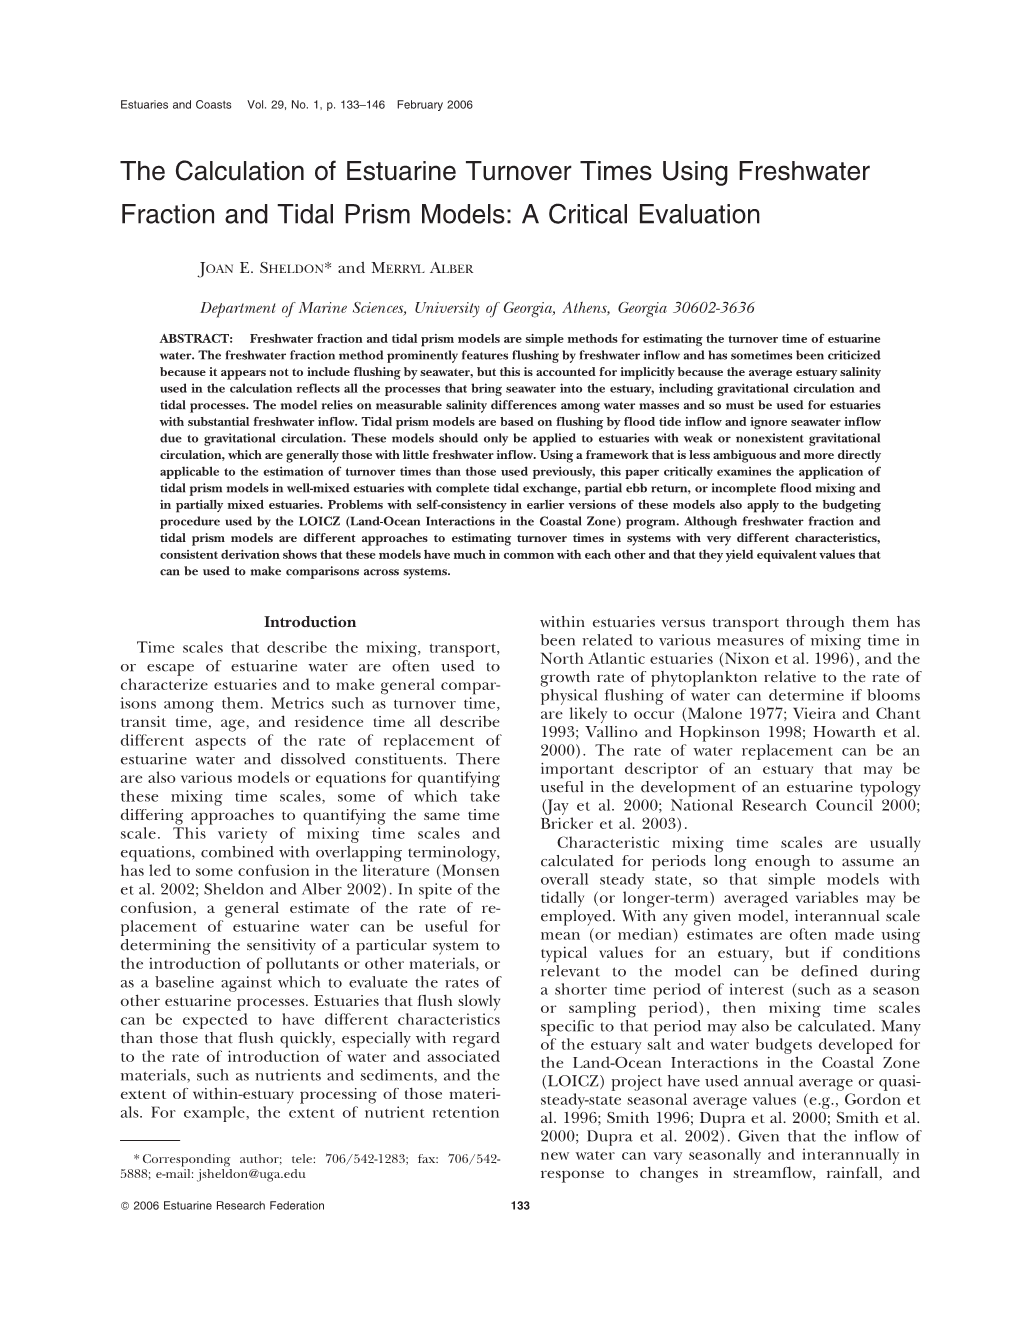 Sheldon, J.E. and Alber, M. 2006. the Calculation of Estuarine Turnover